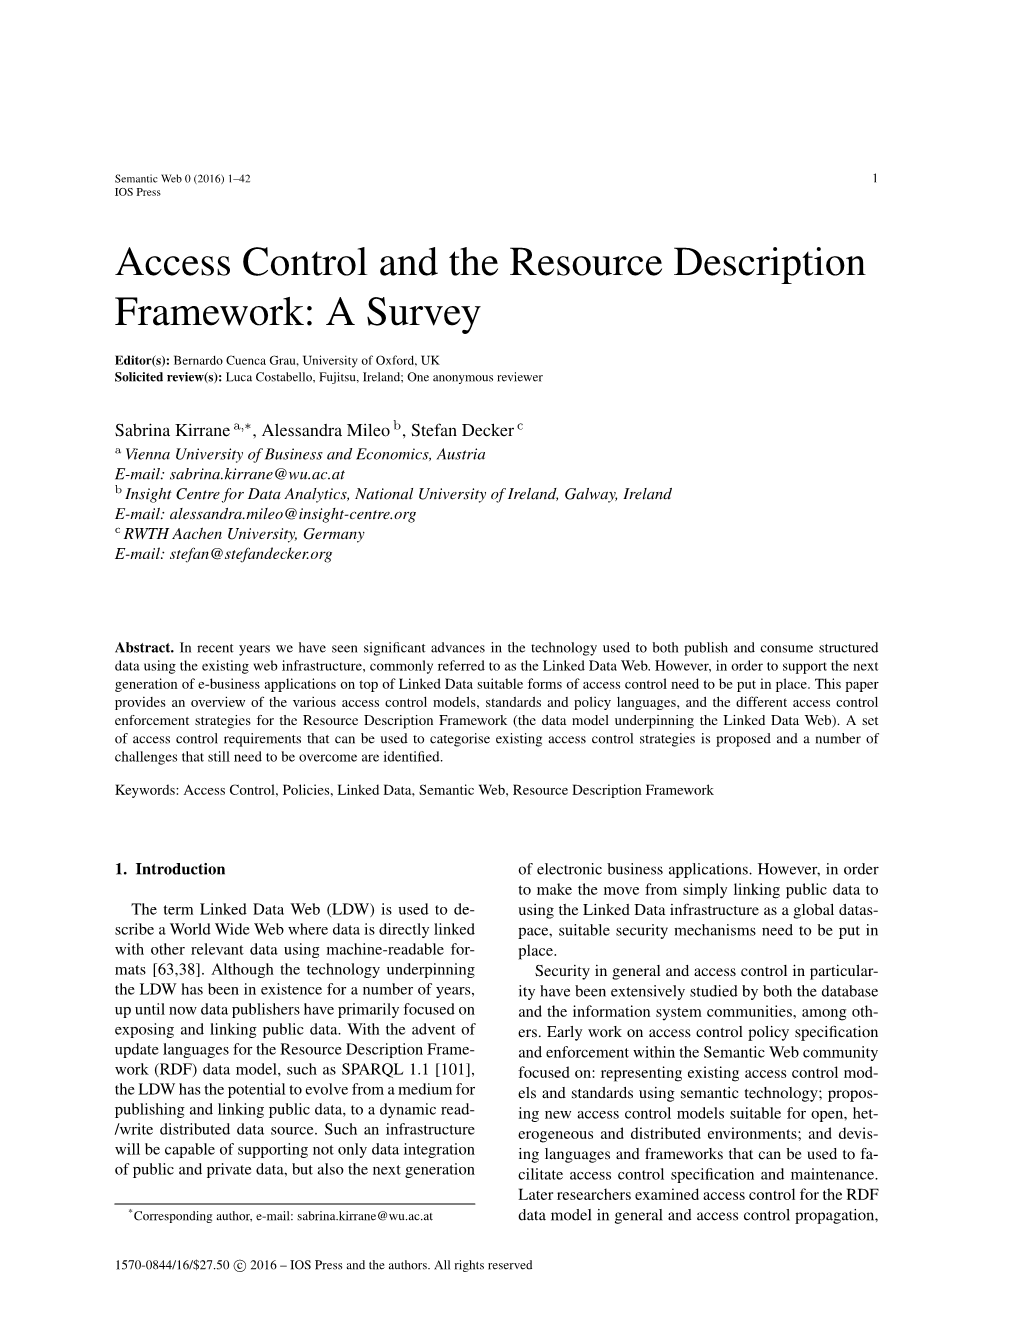 Access Control and the Resource Description Framework: a Survey